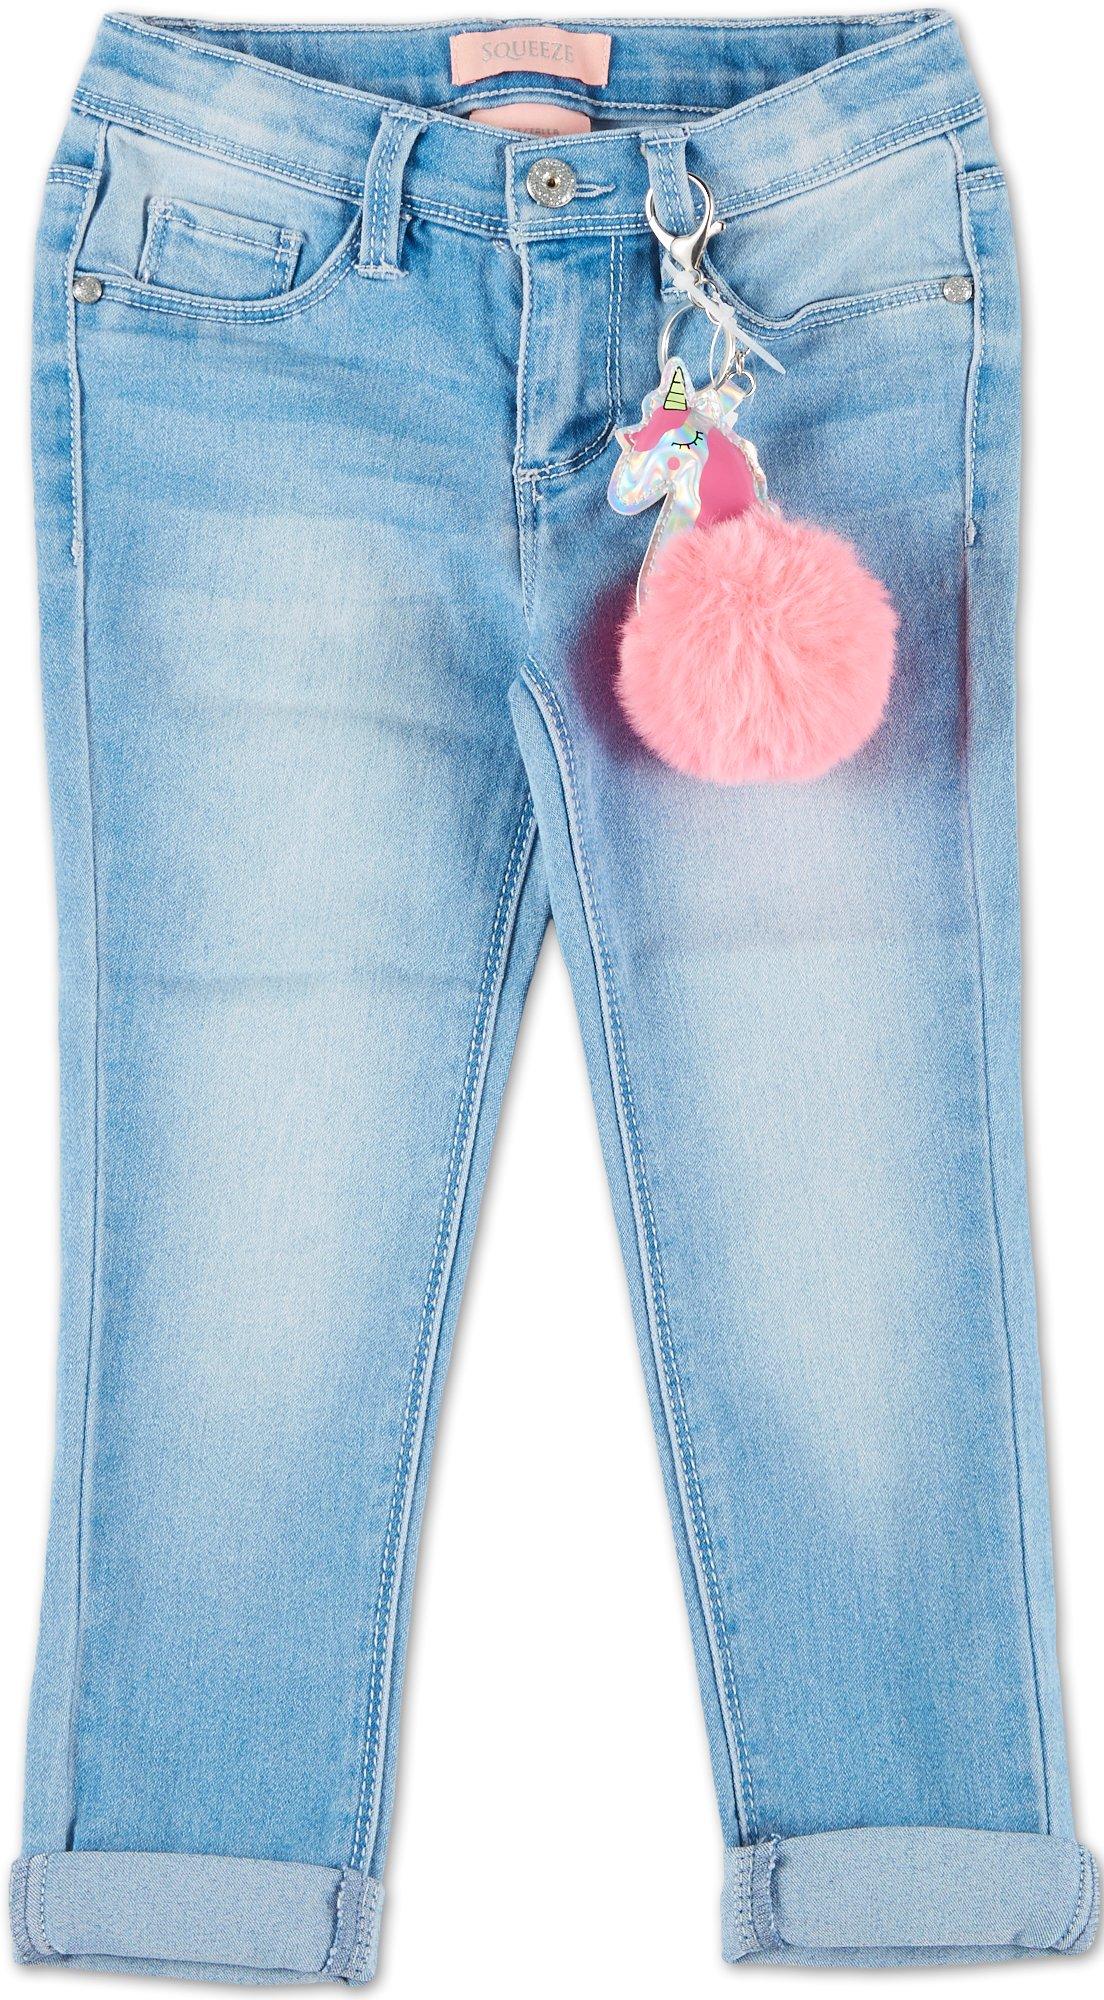 jeans for girls below 500